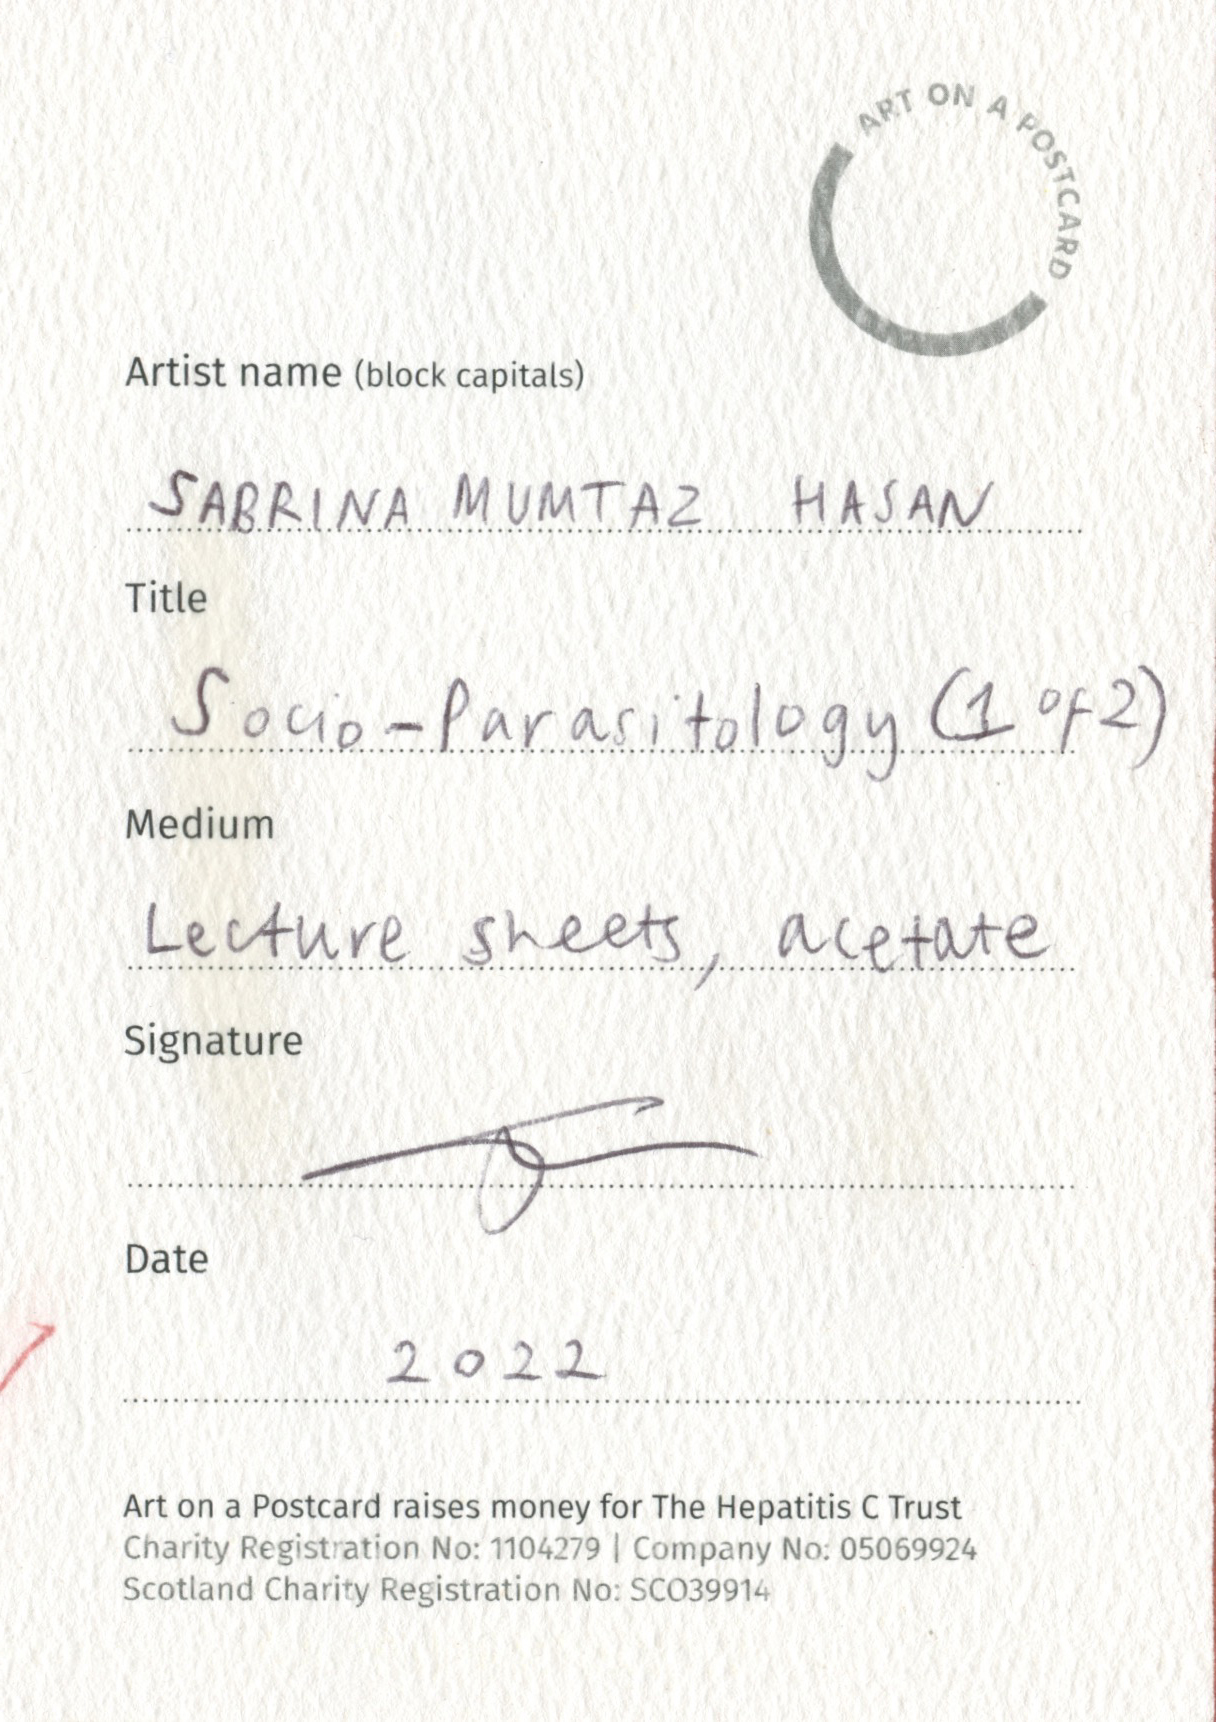 13. Sabrina Mumtaz Hasan - Socio-Parasitology (1/2) - BACK